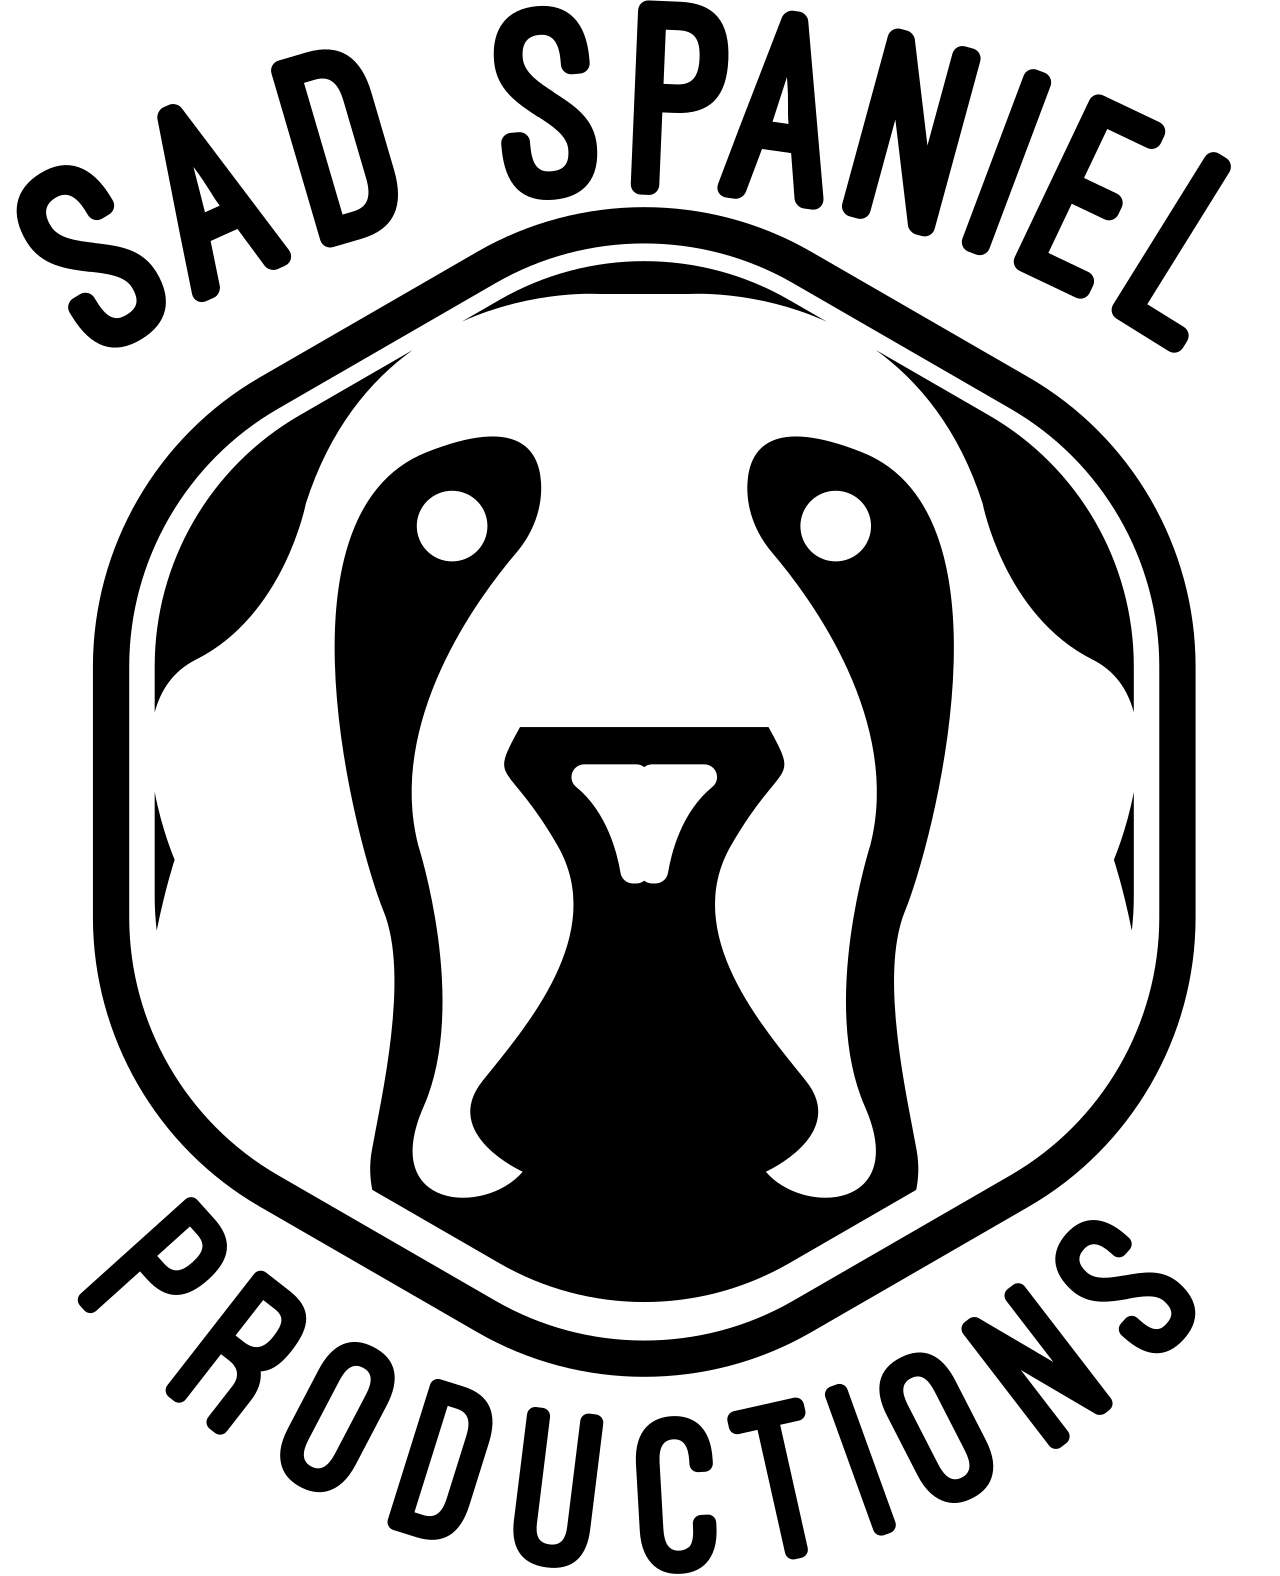 Sad Spaniel's logo